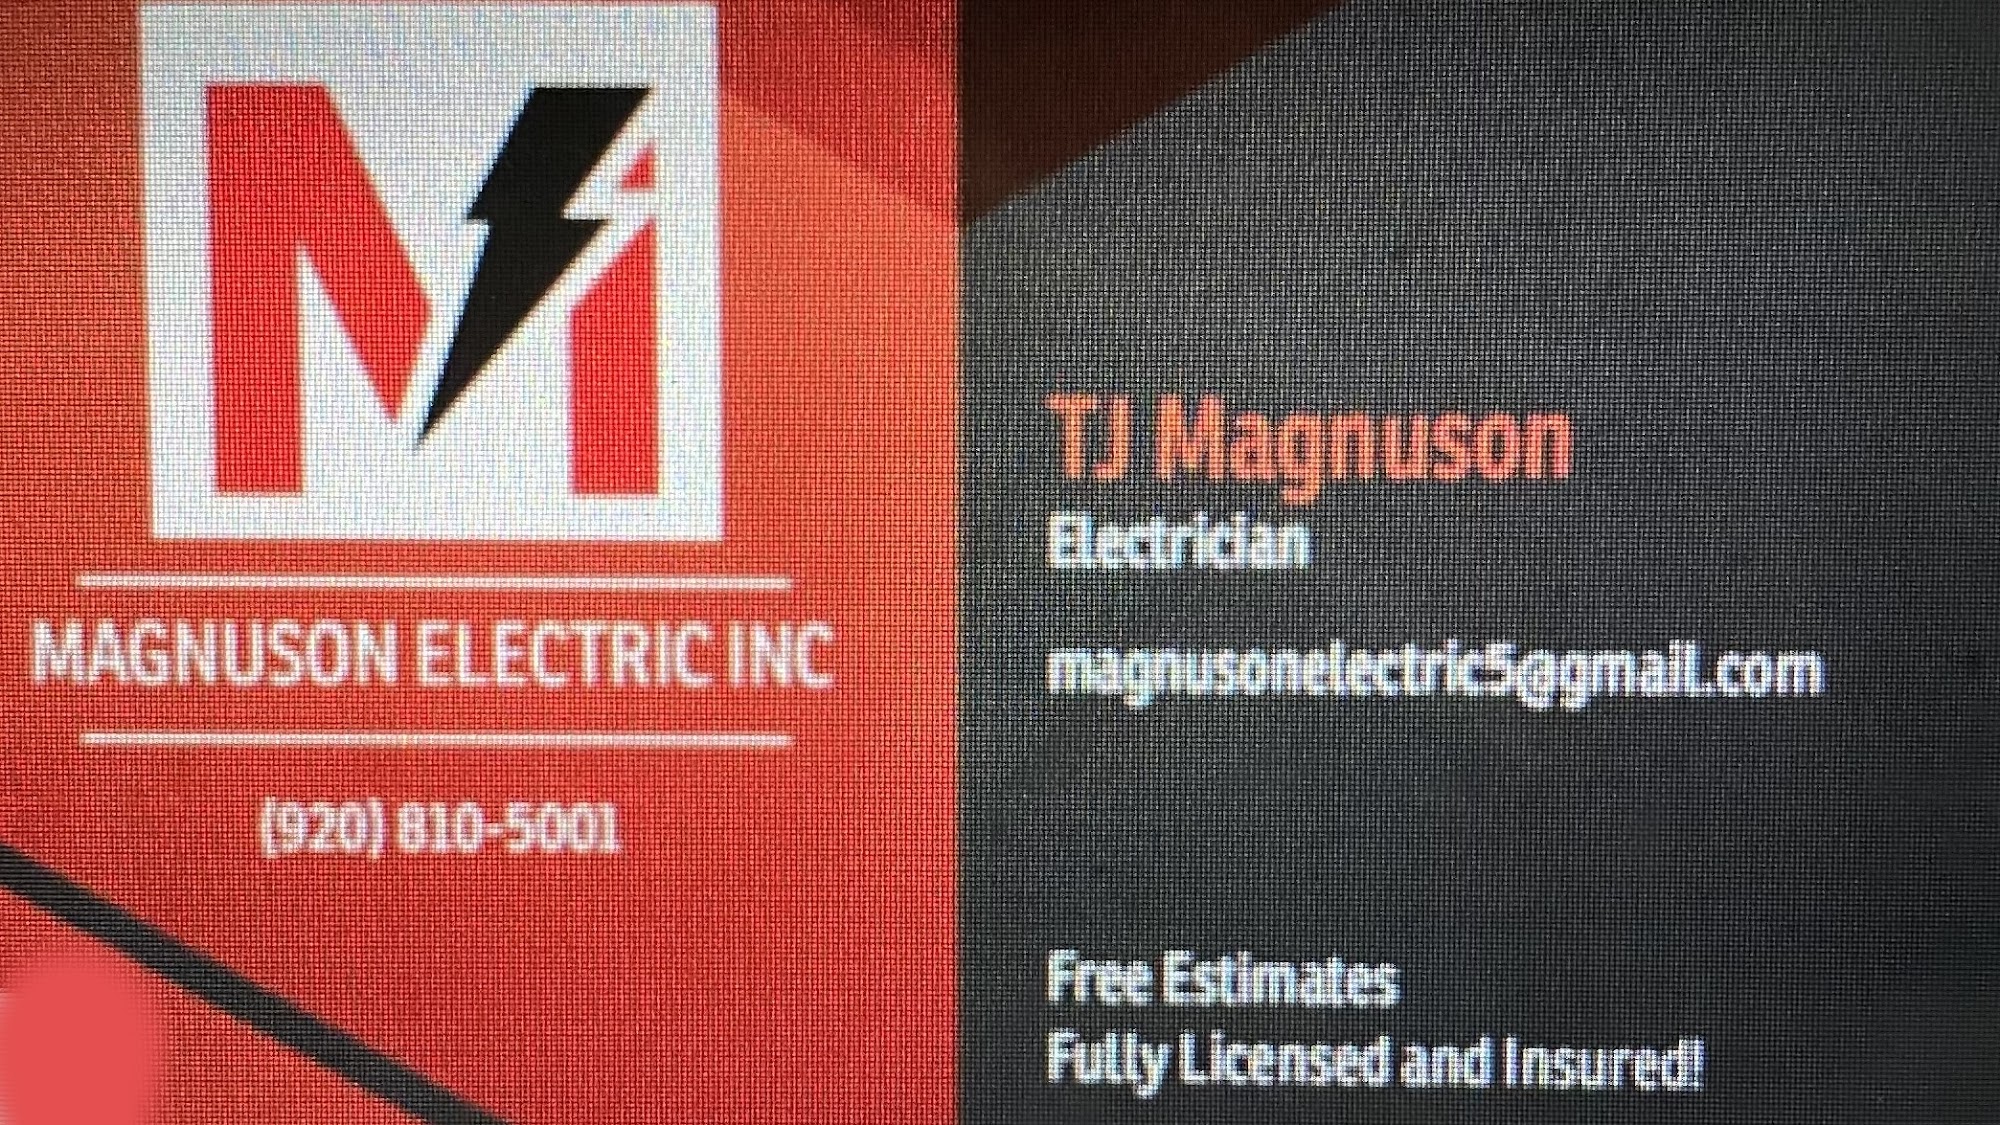 Magnuson Electric Inc. W4759 Trevino Ct, Sherwood Wisconsin 54169